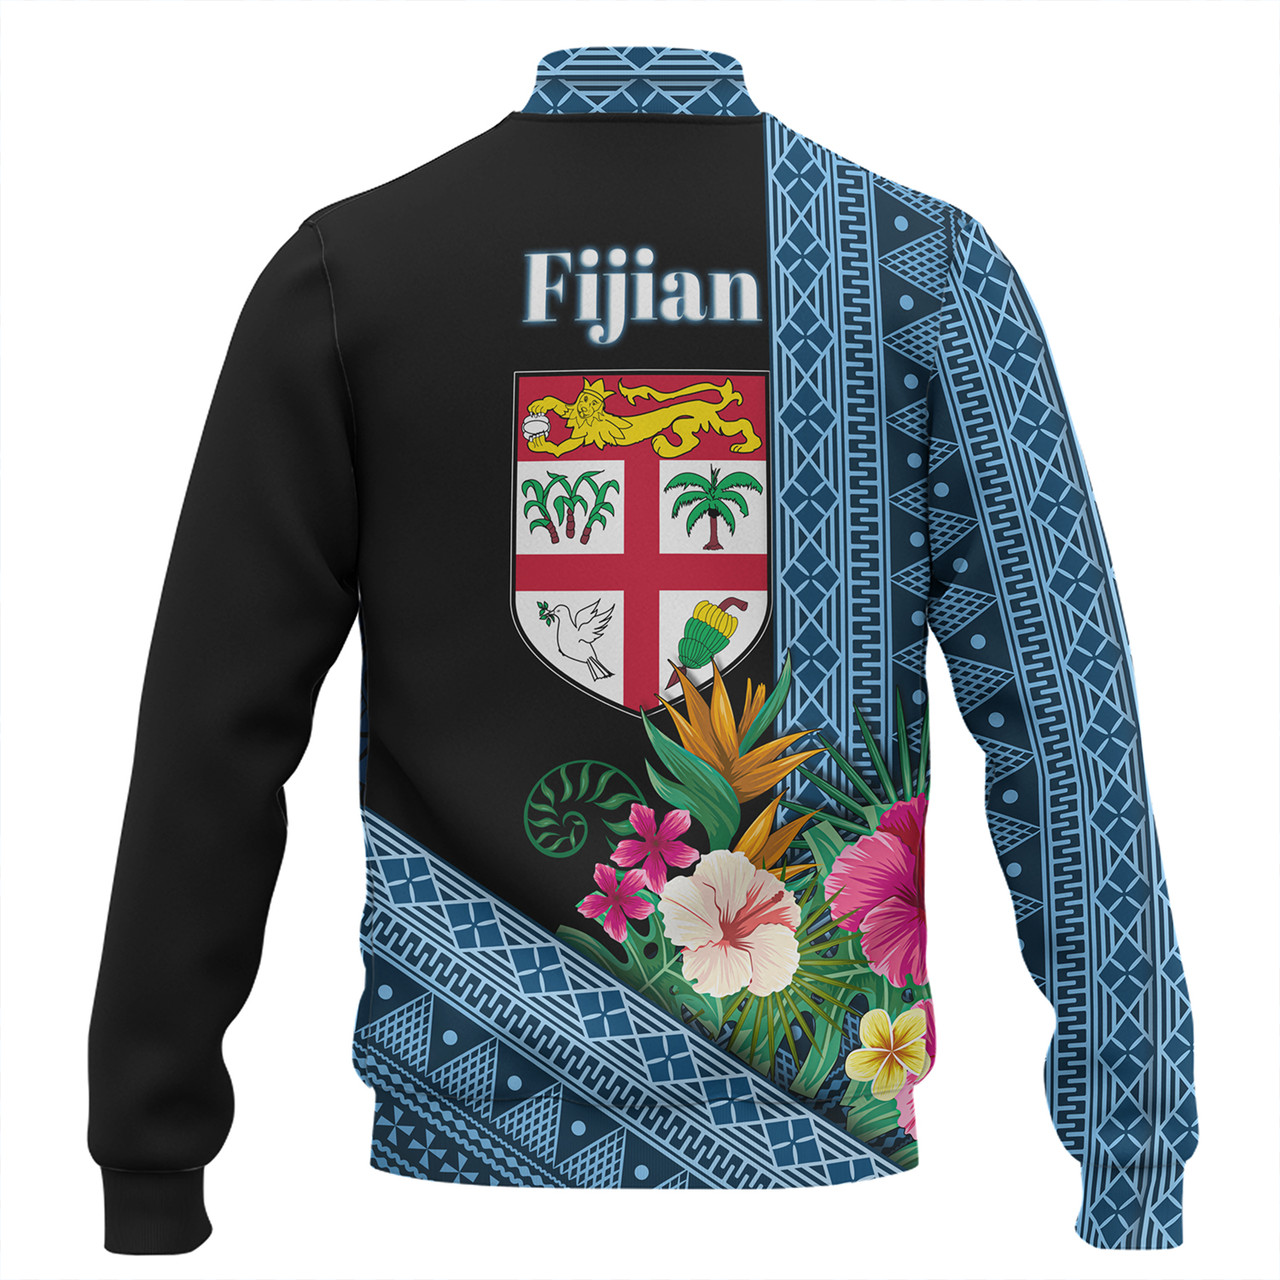 Fiji Baseball Jacket Polynesia Pattern With Tropical Flower